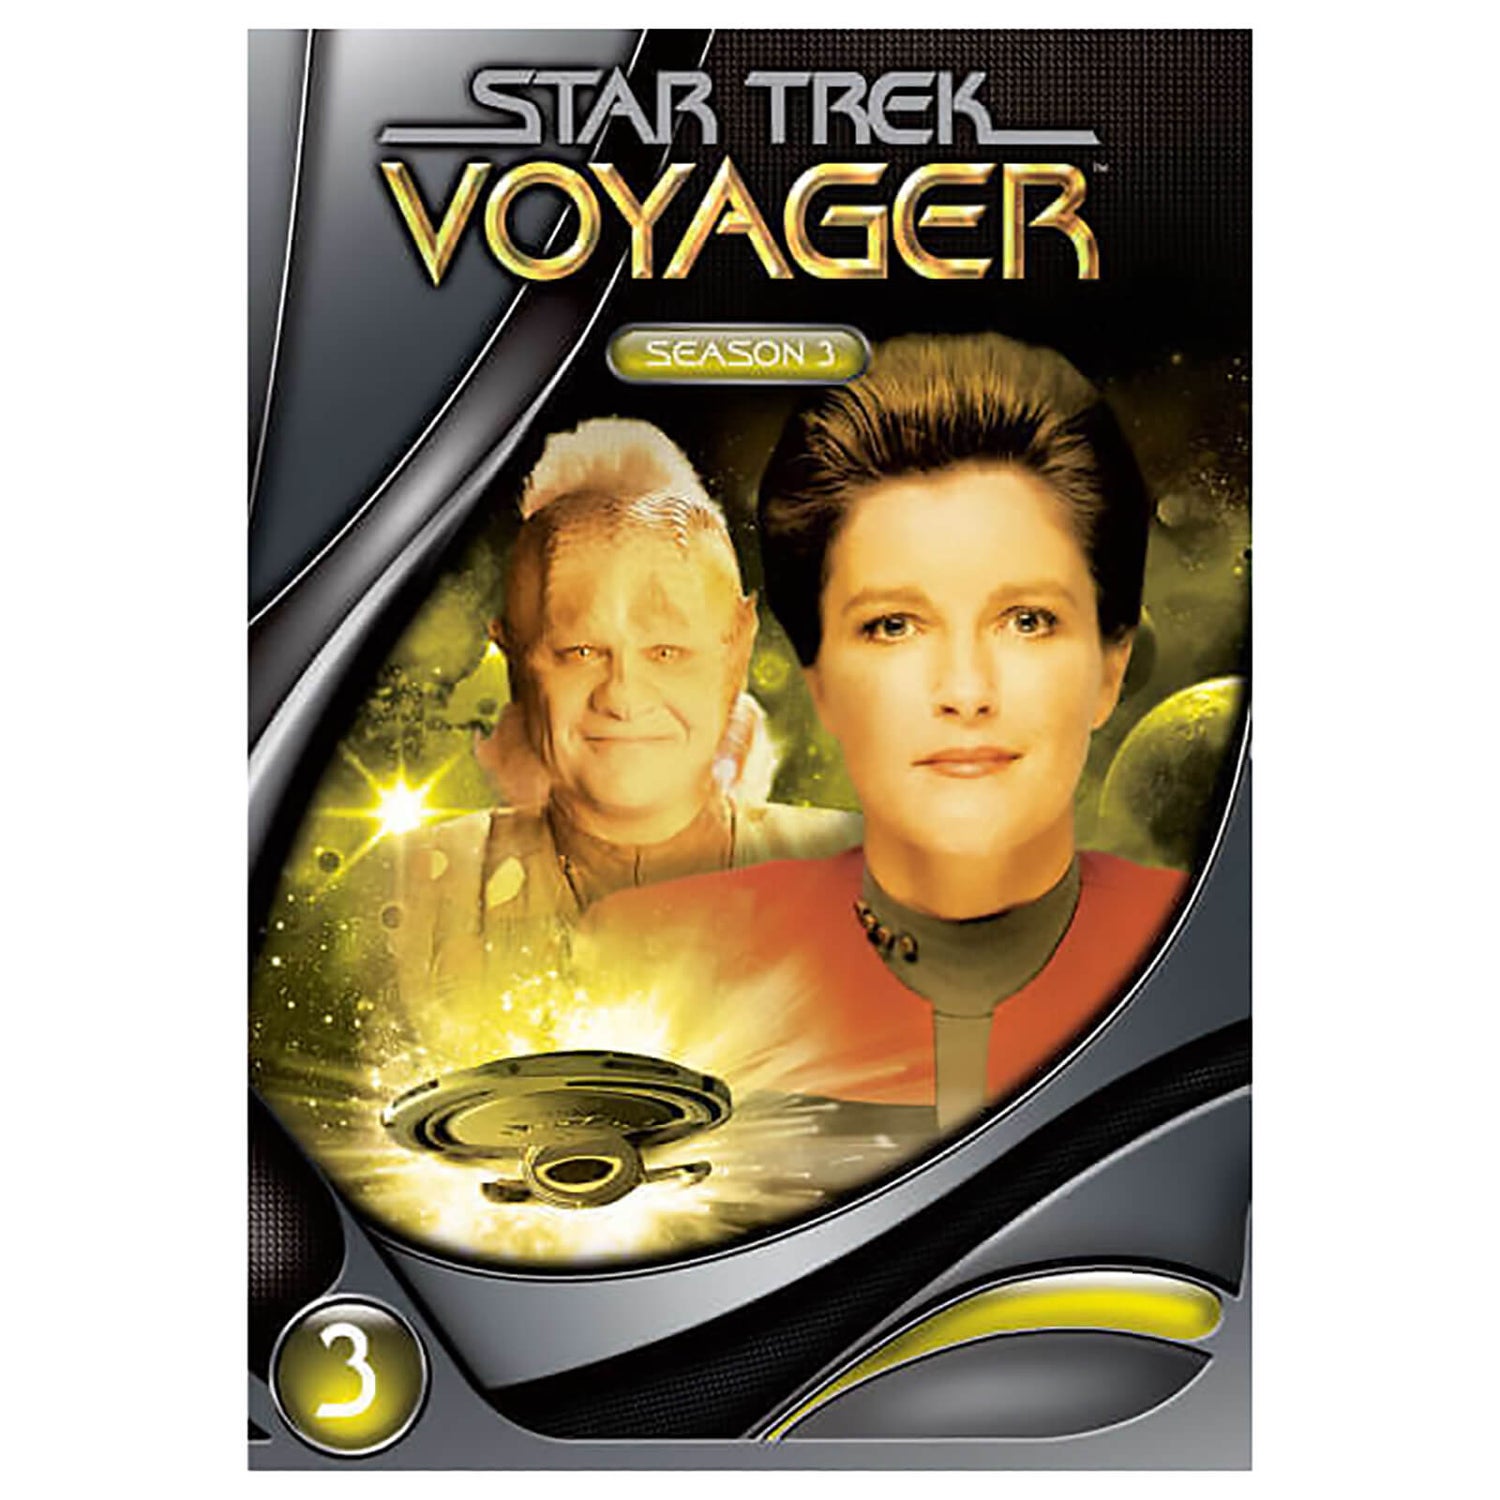 Star Trek Voyager - Season 3 (Slims)